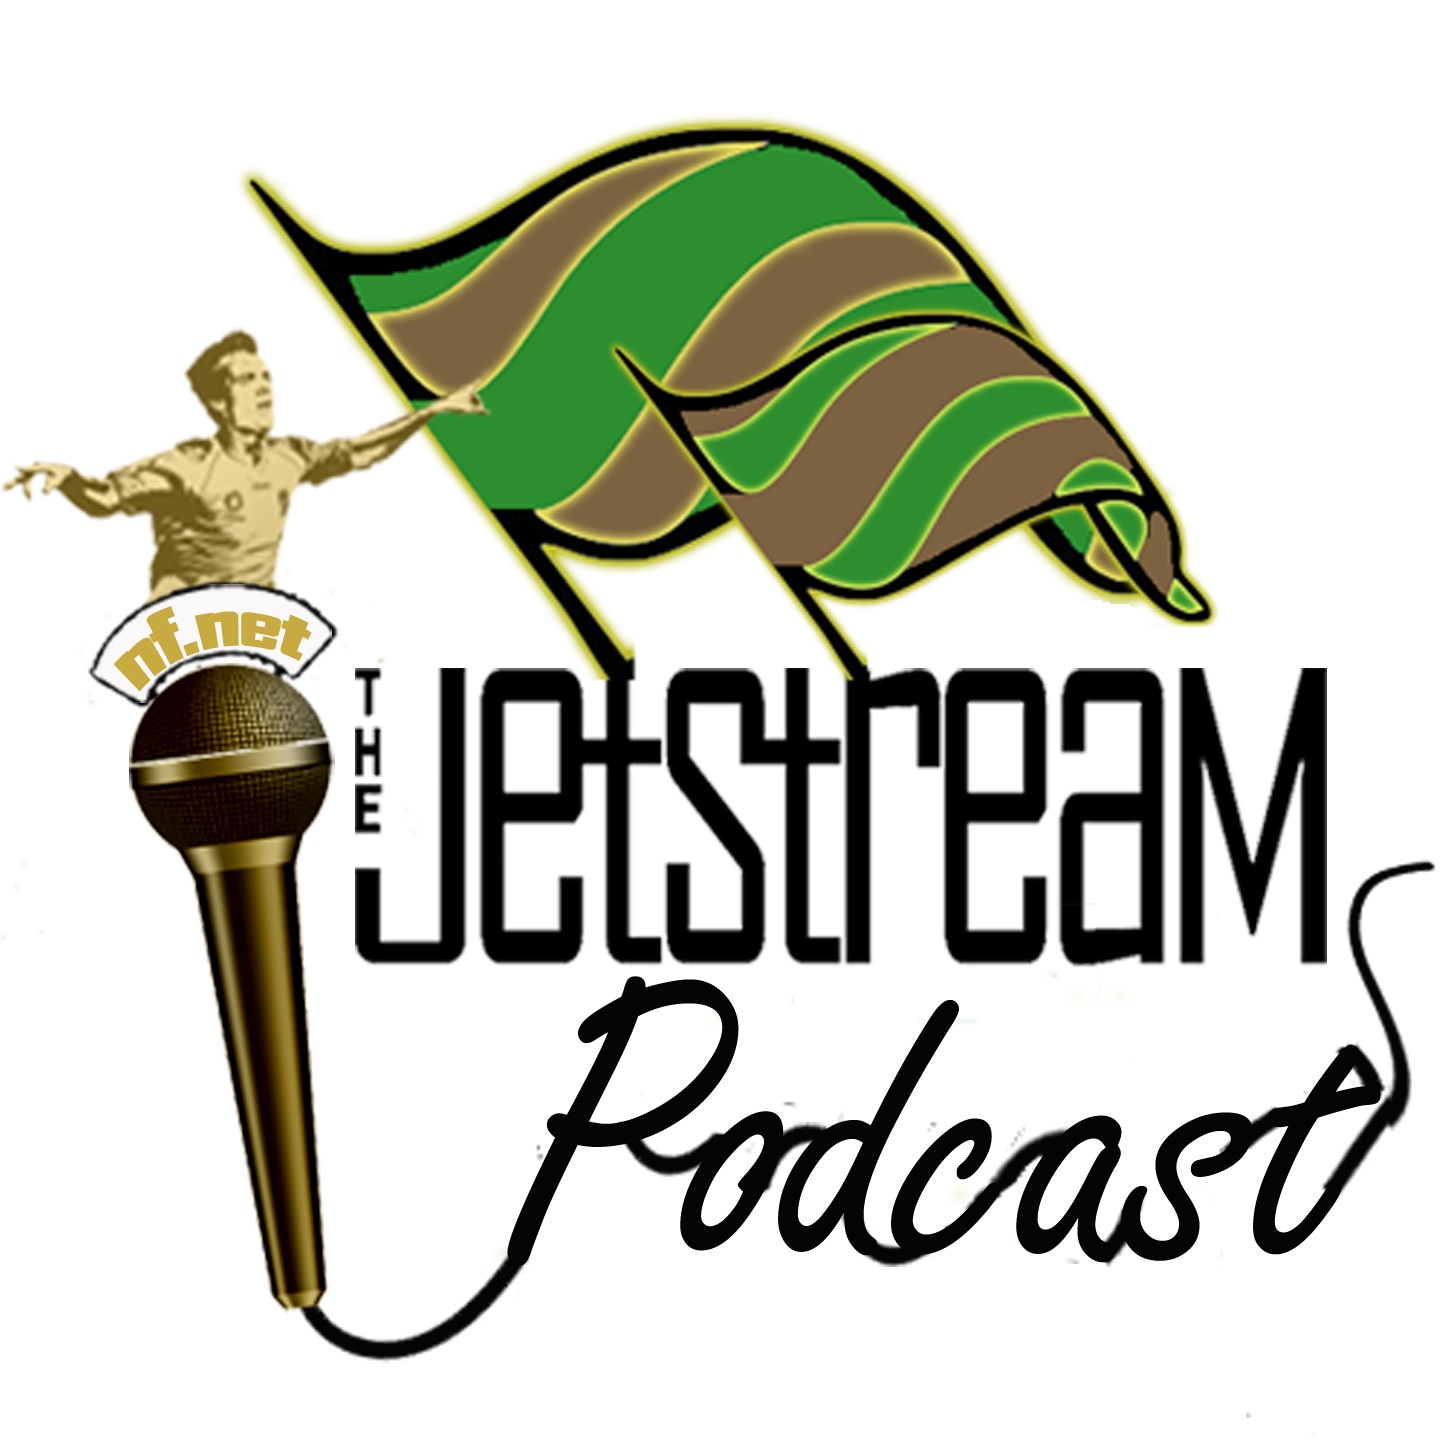 The Jetstream Podcast